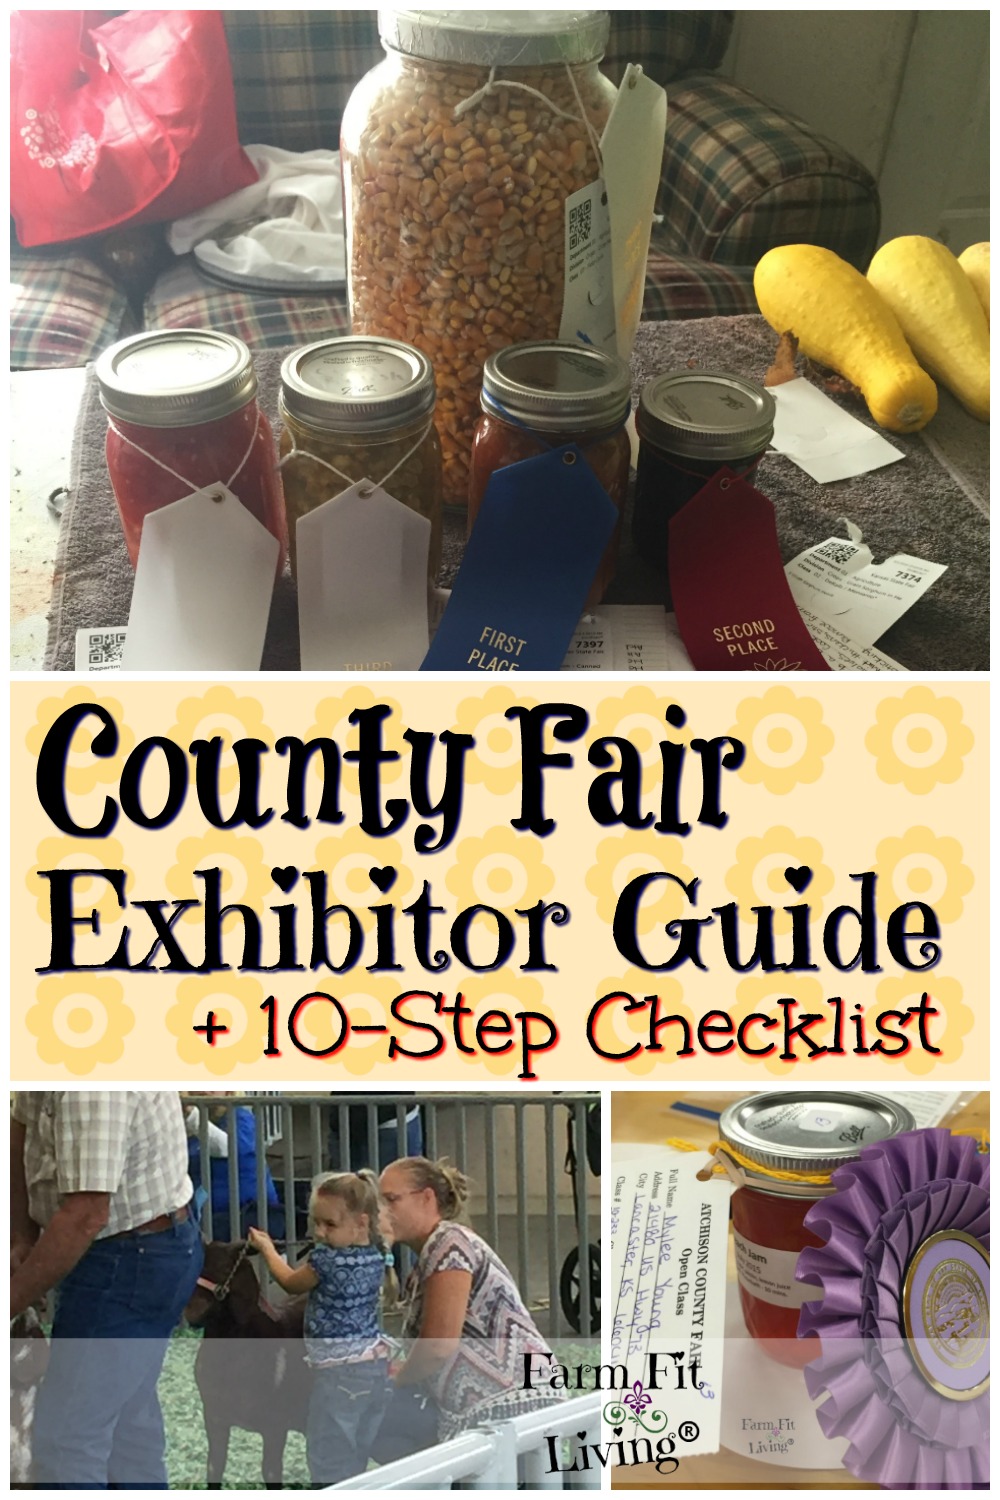 County Fair Exhibitor Guide